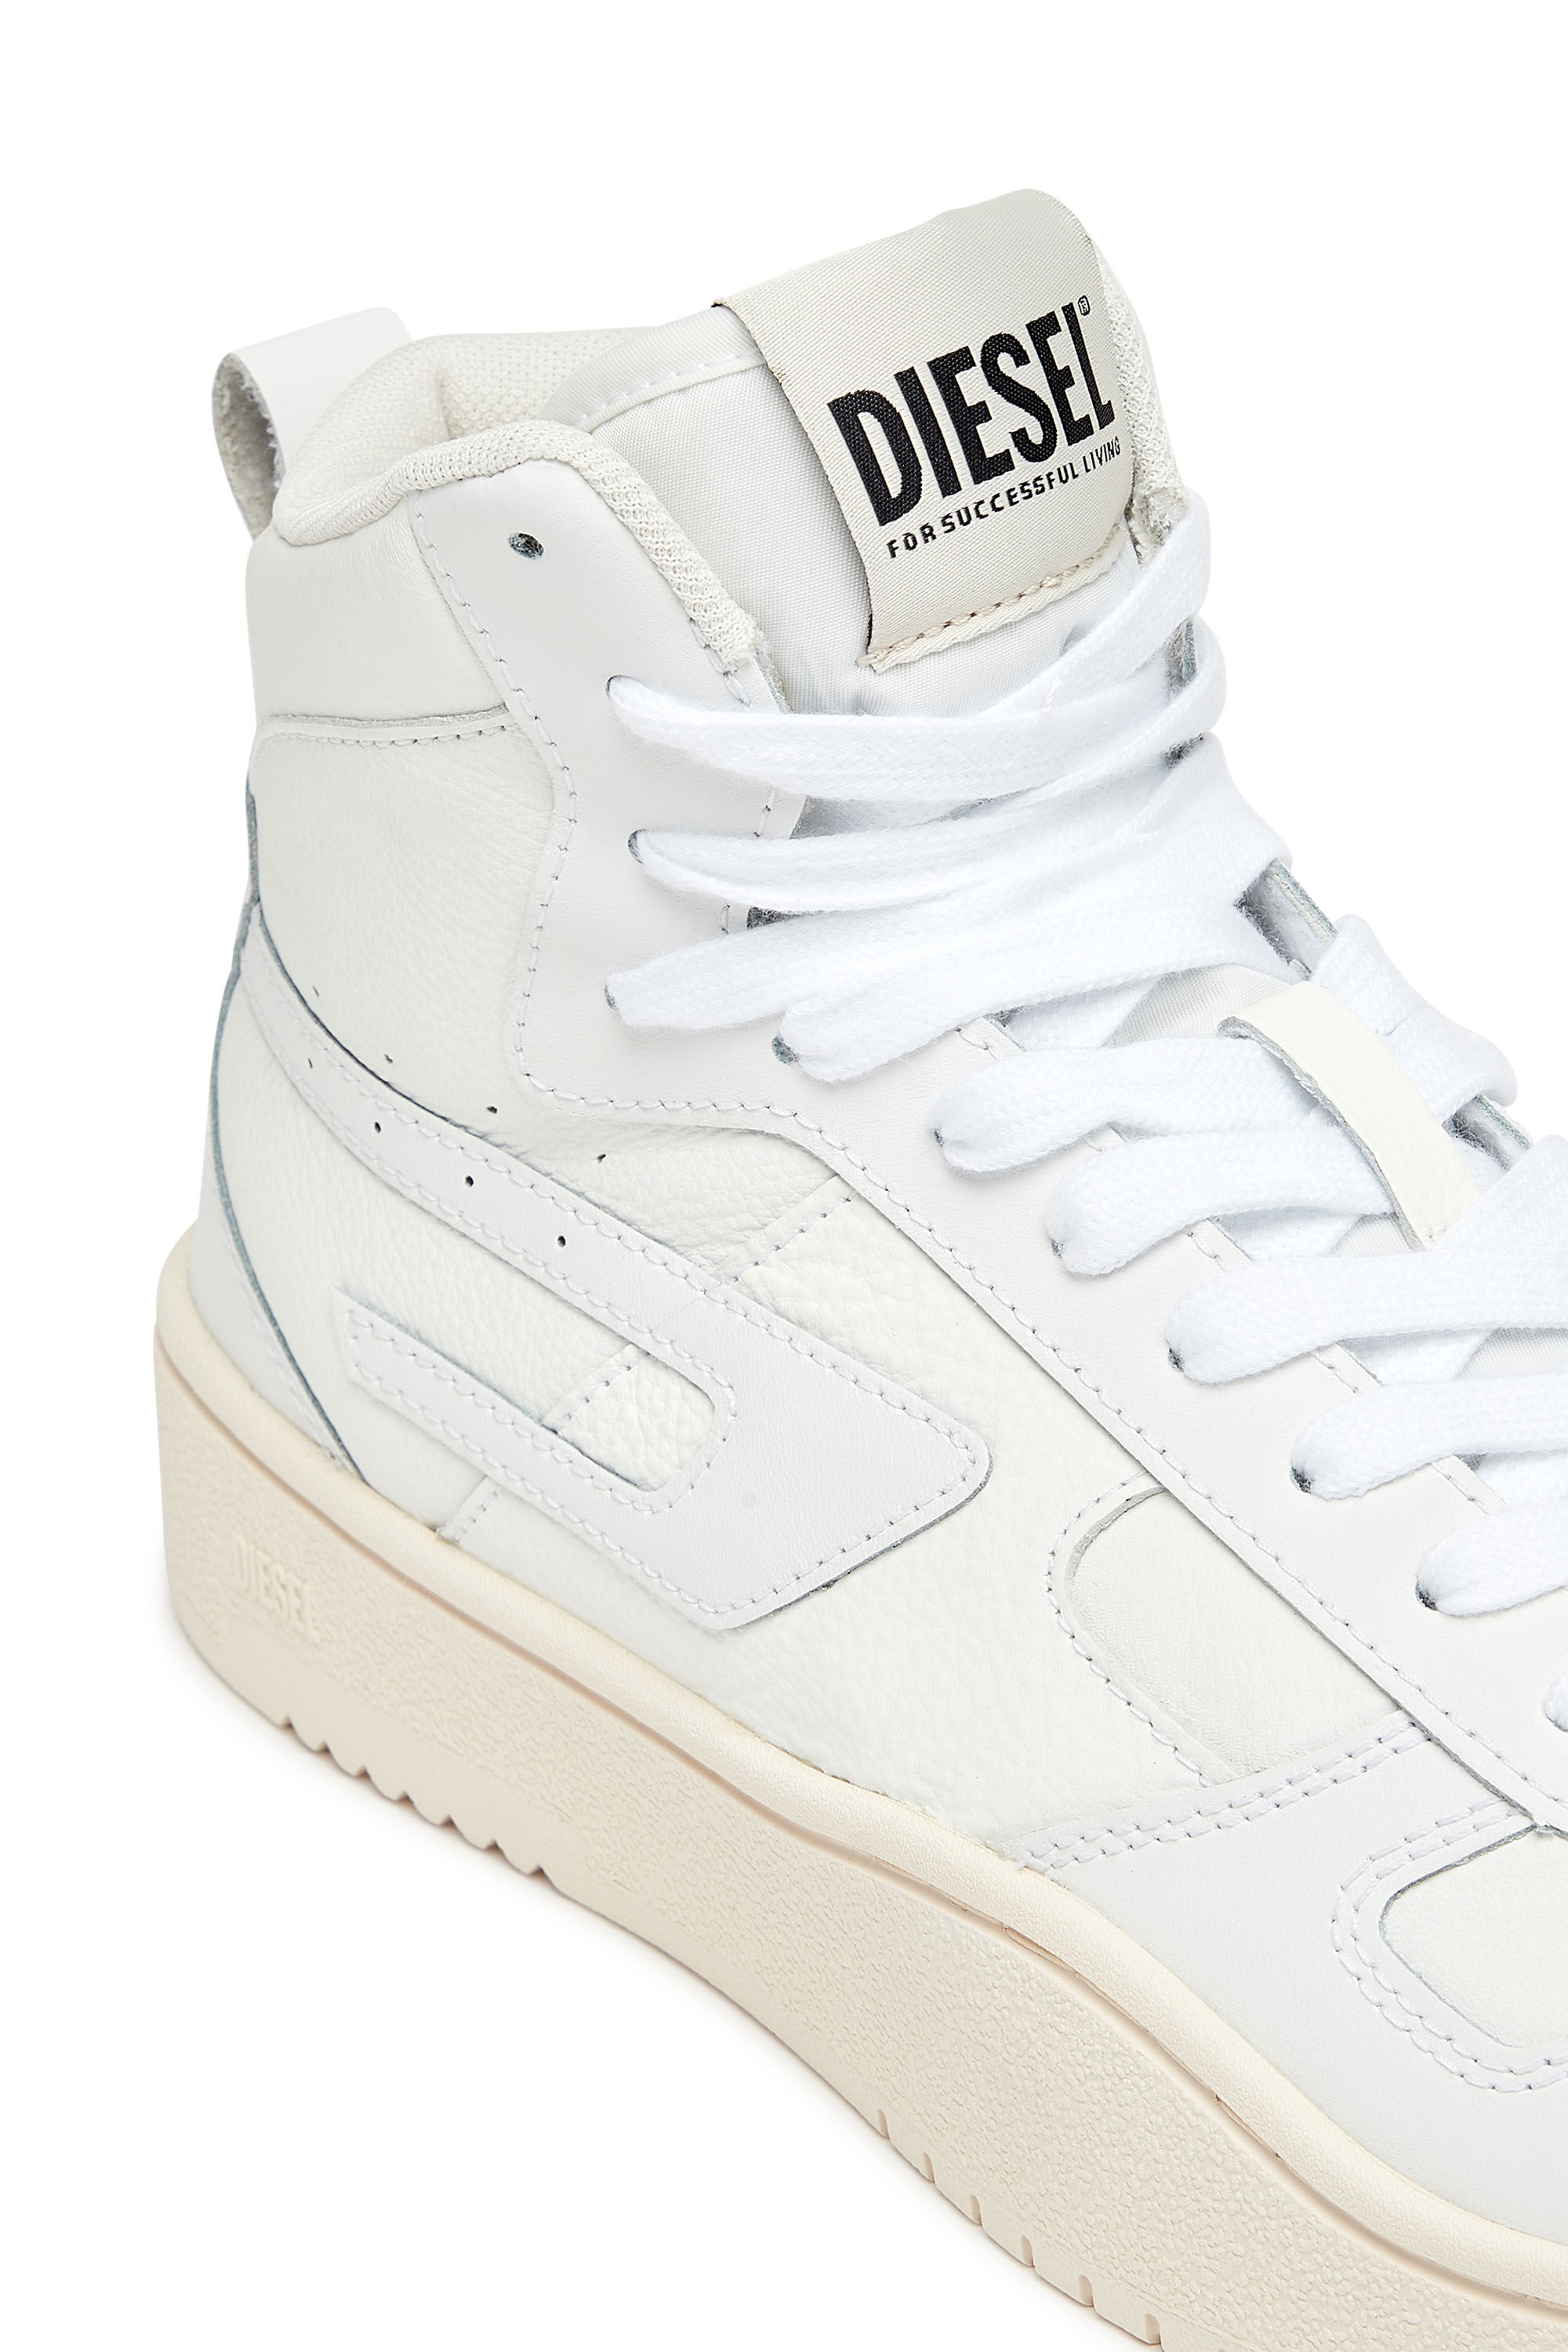 Diesel - S-UKIYO V2 MID, Man S-Ukiyo V2 Mid - High-top sneakers with D branding in White - Image 6